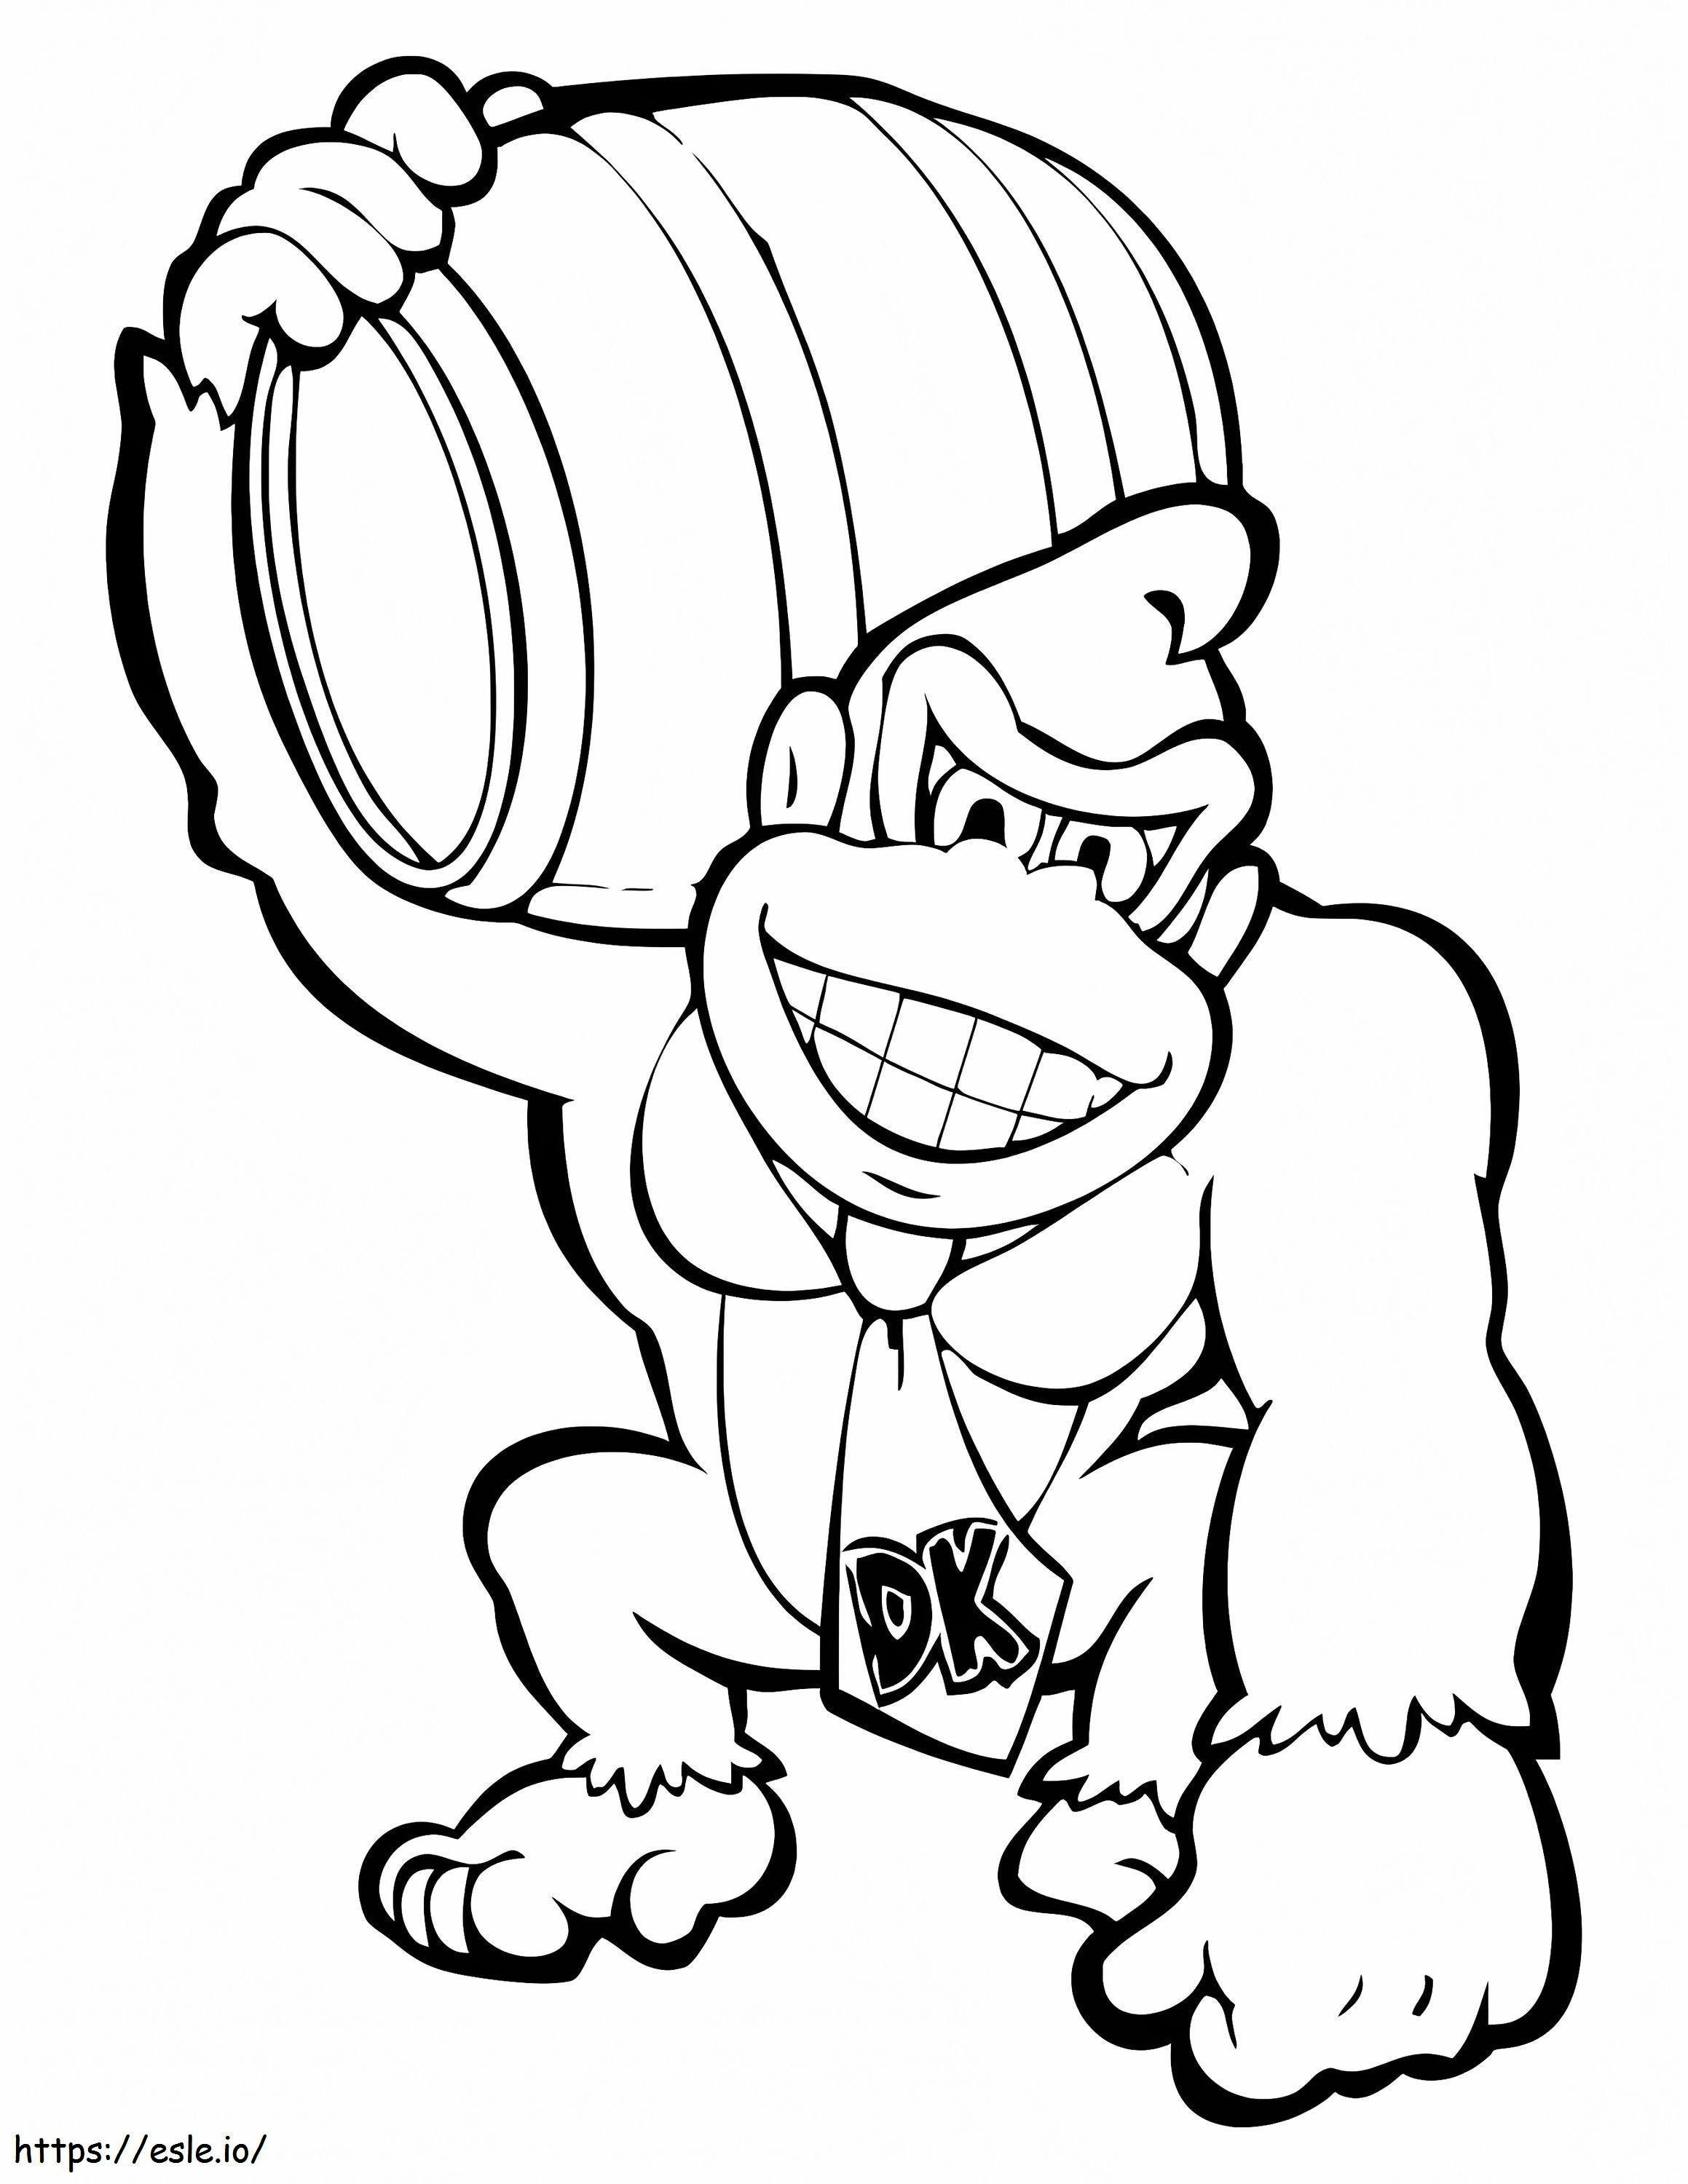 Mario Donkey Kong ausmalbilder